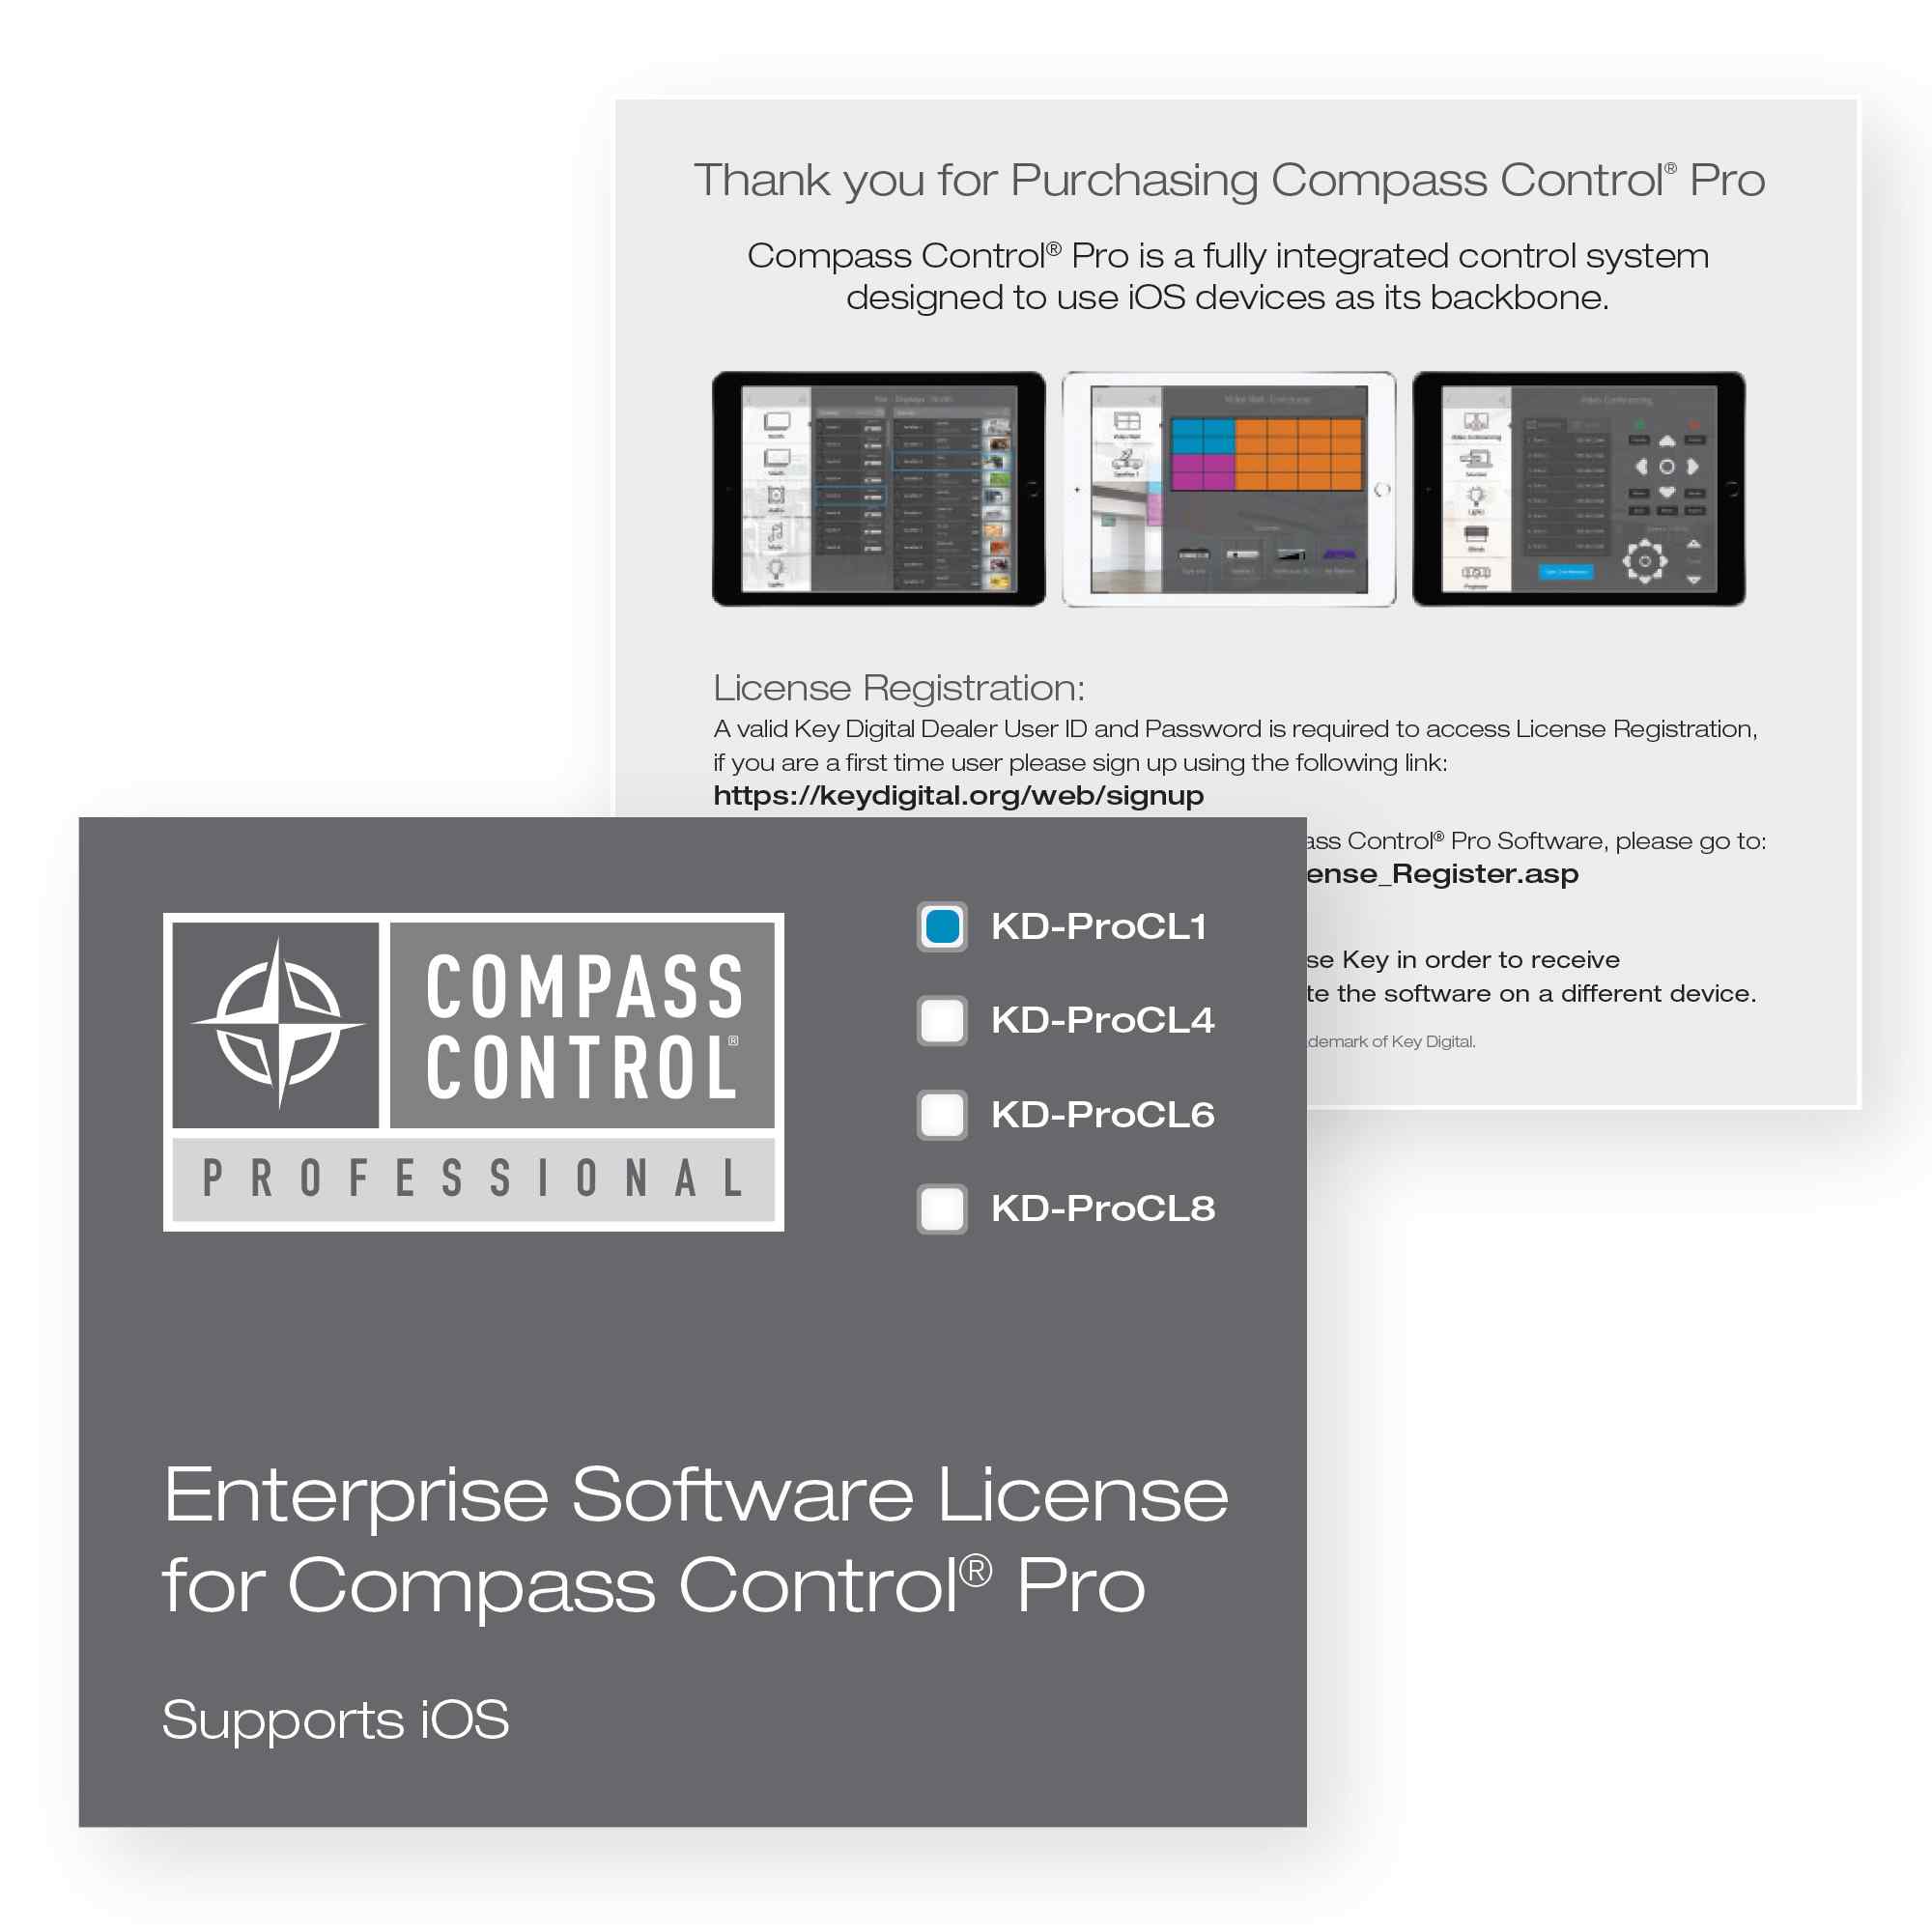 Thumbnail of Key Digital Enterprise Software License for Compass Control Pro